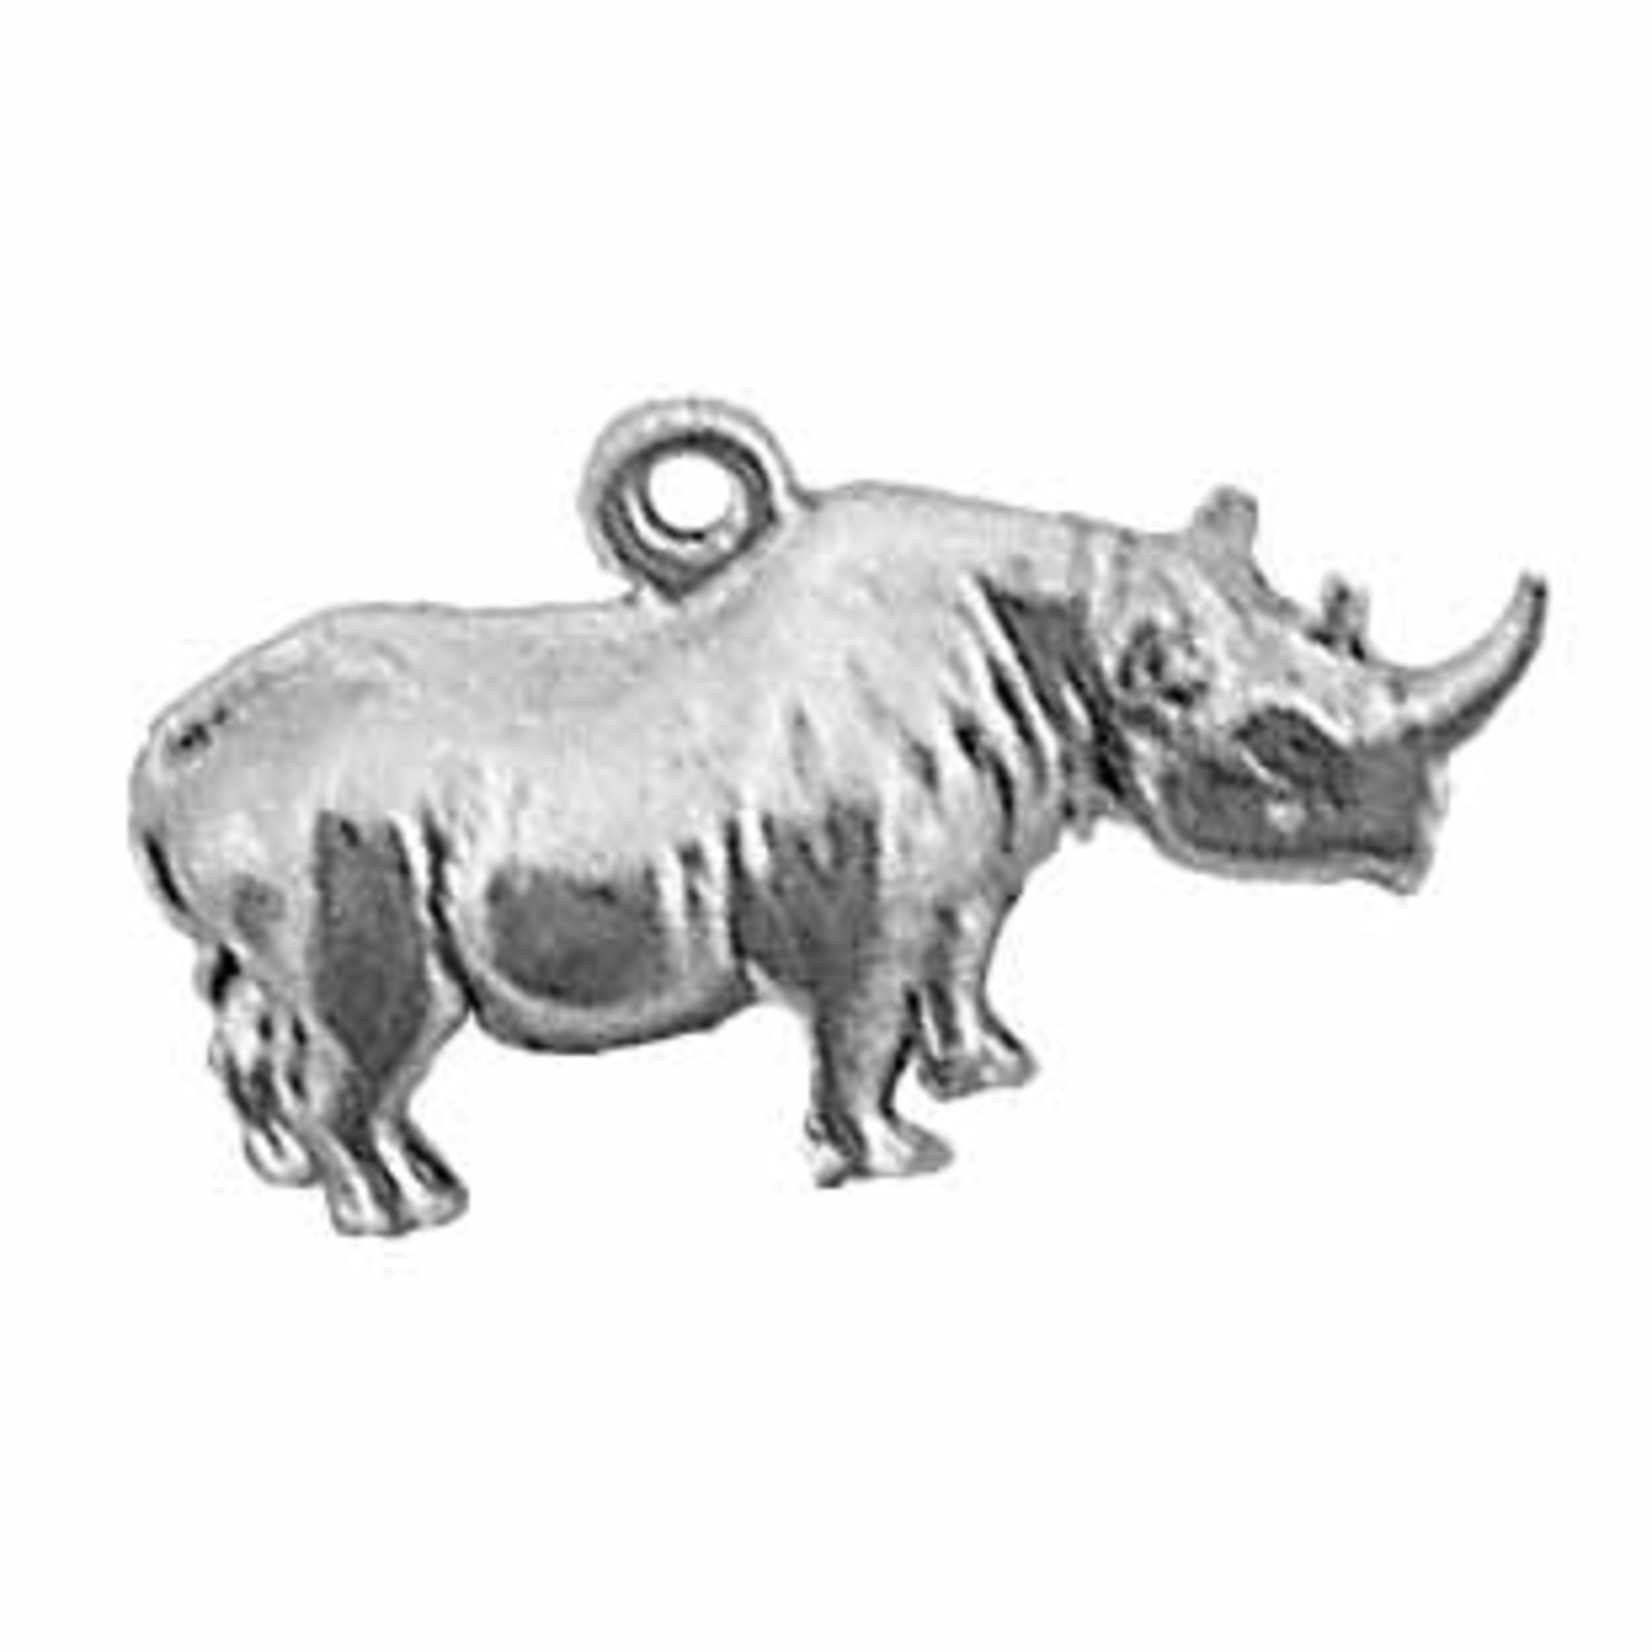 lp1138 large rhinoceros 7g